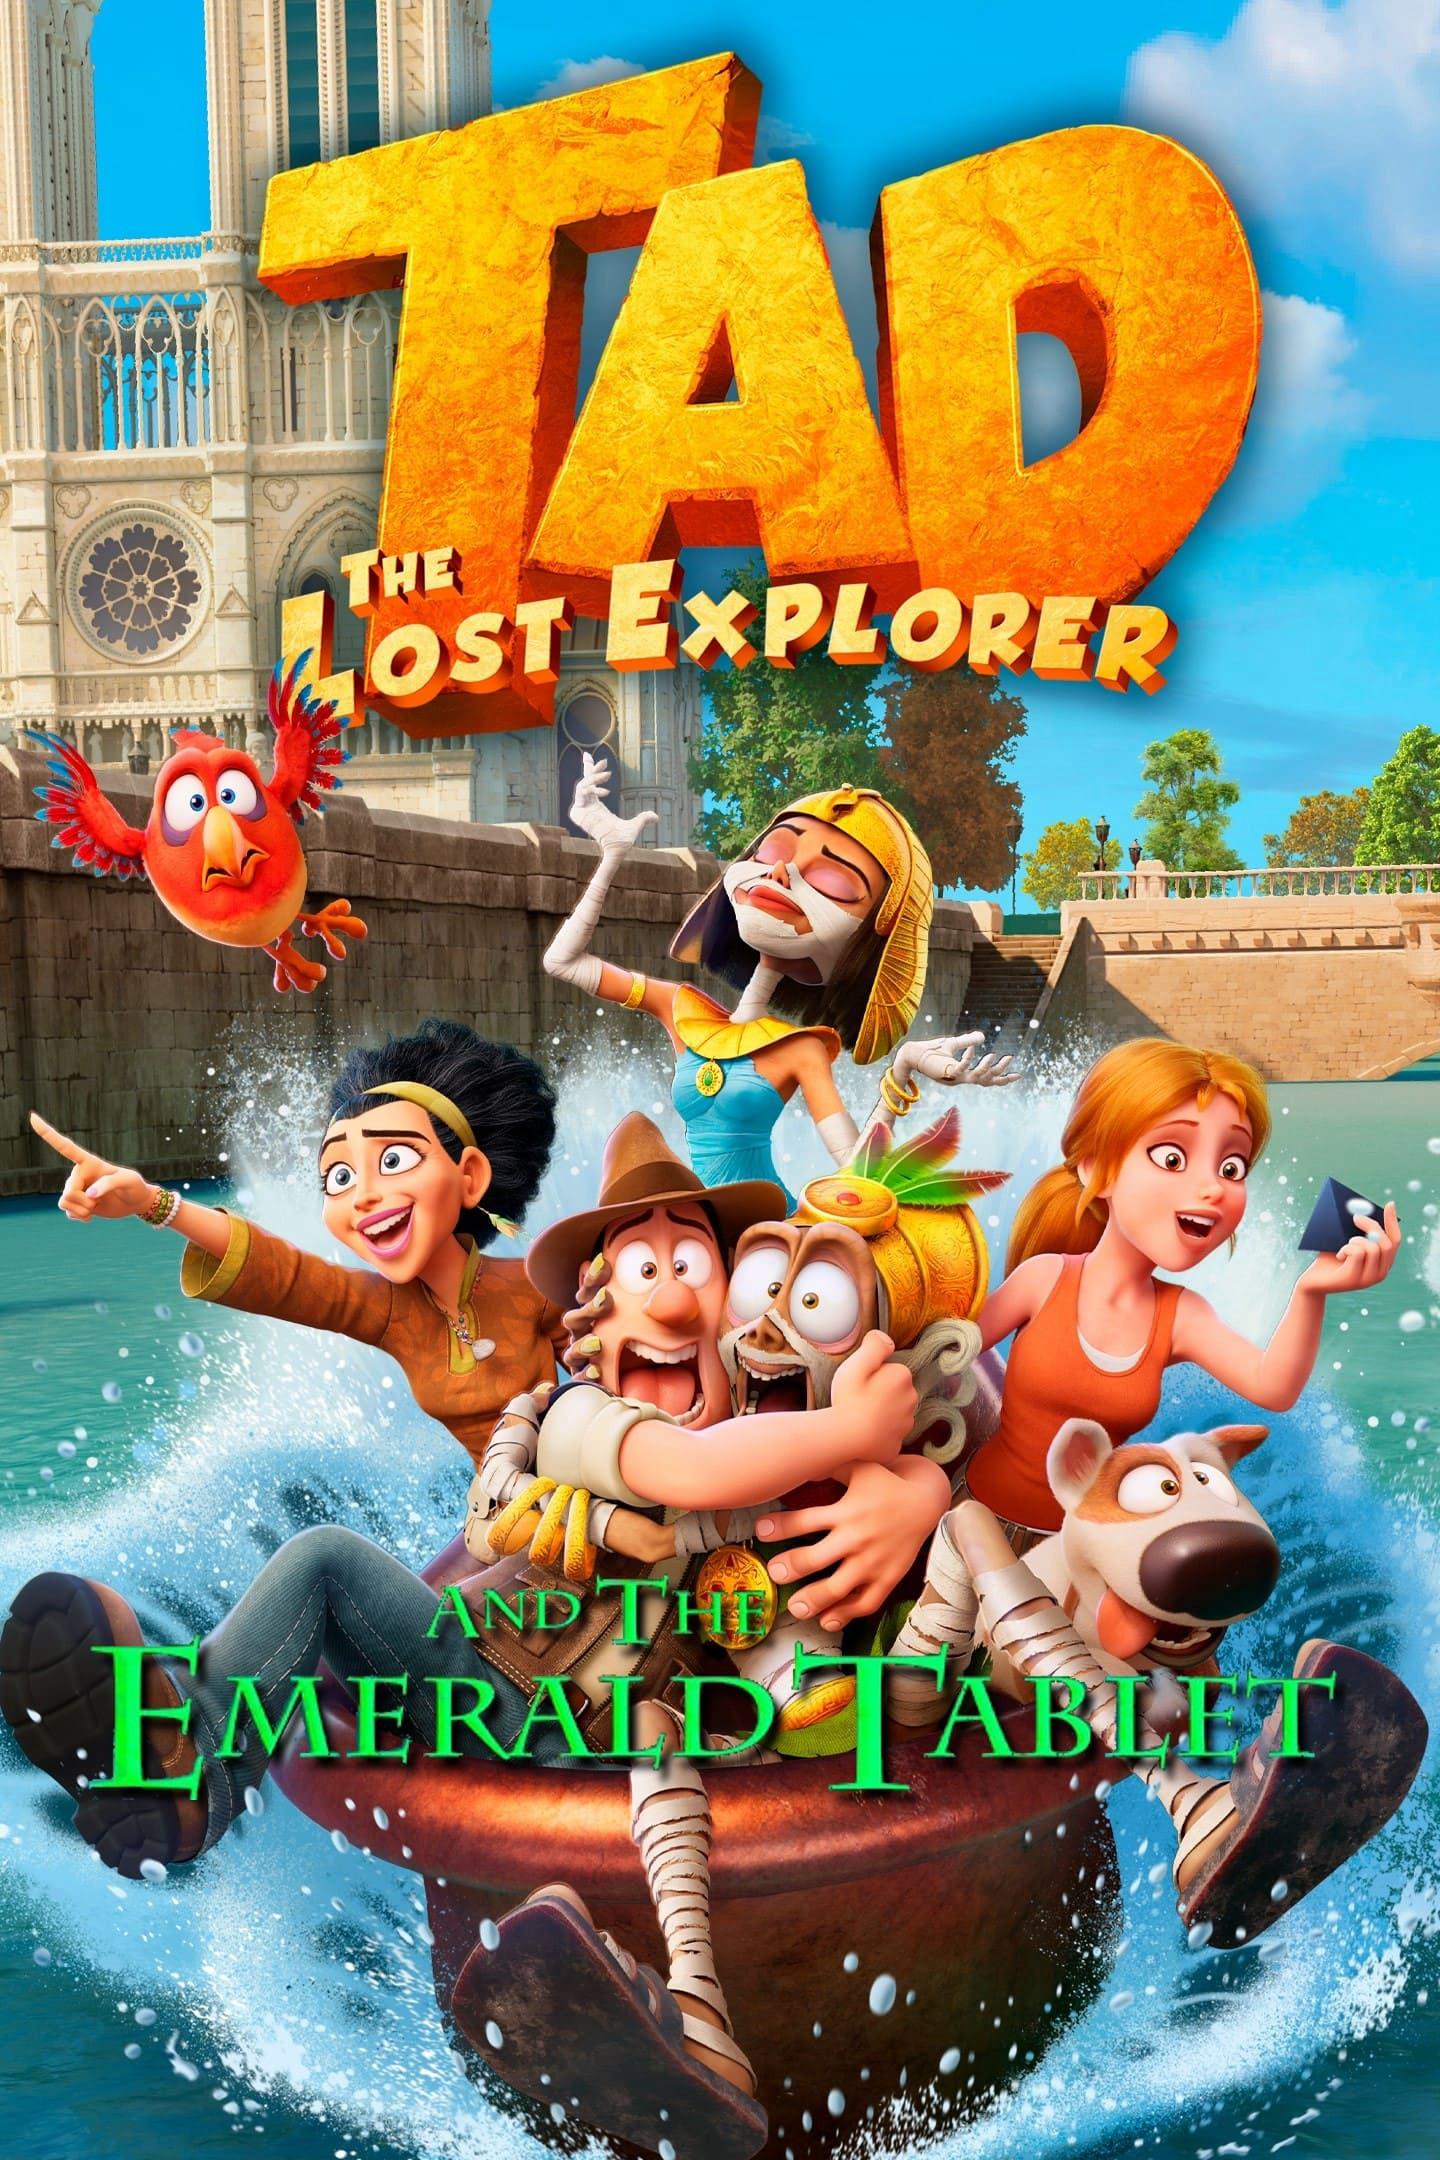 Poster Phim Tad Truy Tìm Kho Báu 3: Lời Nguyền Xác Ướp (Tad the Lost Explorer and the Emerald Tablet)